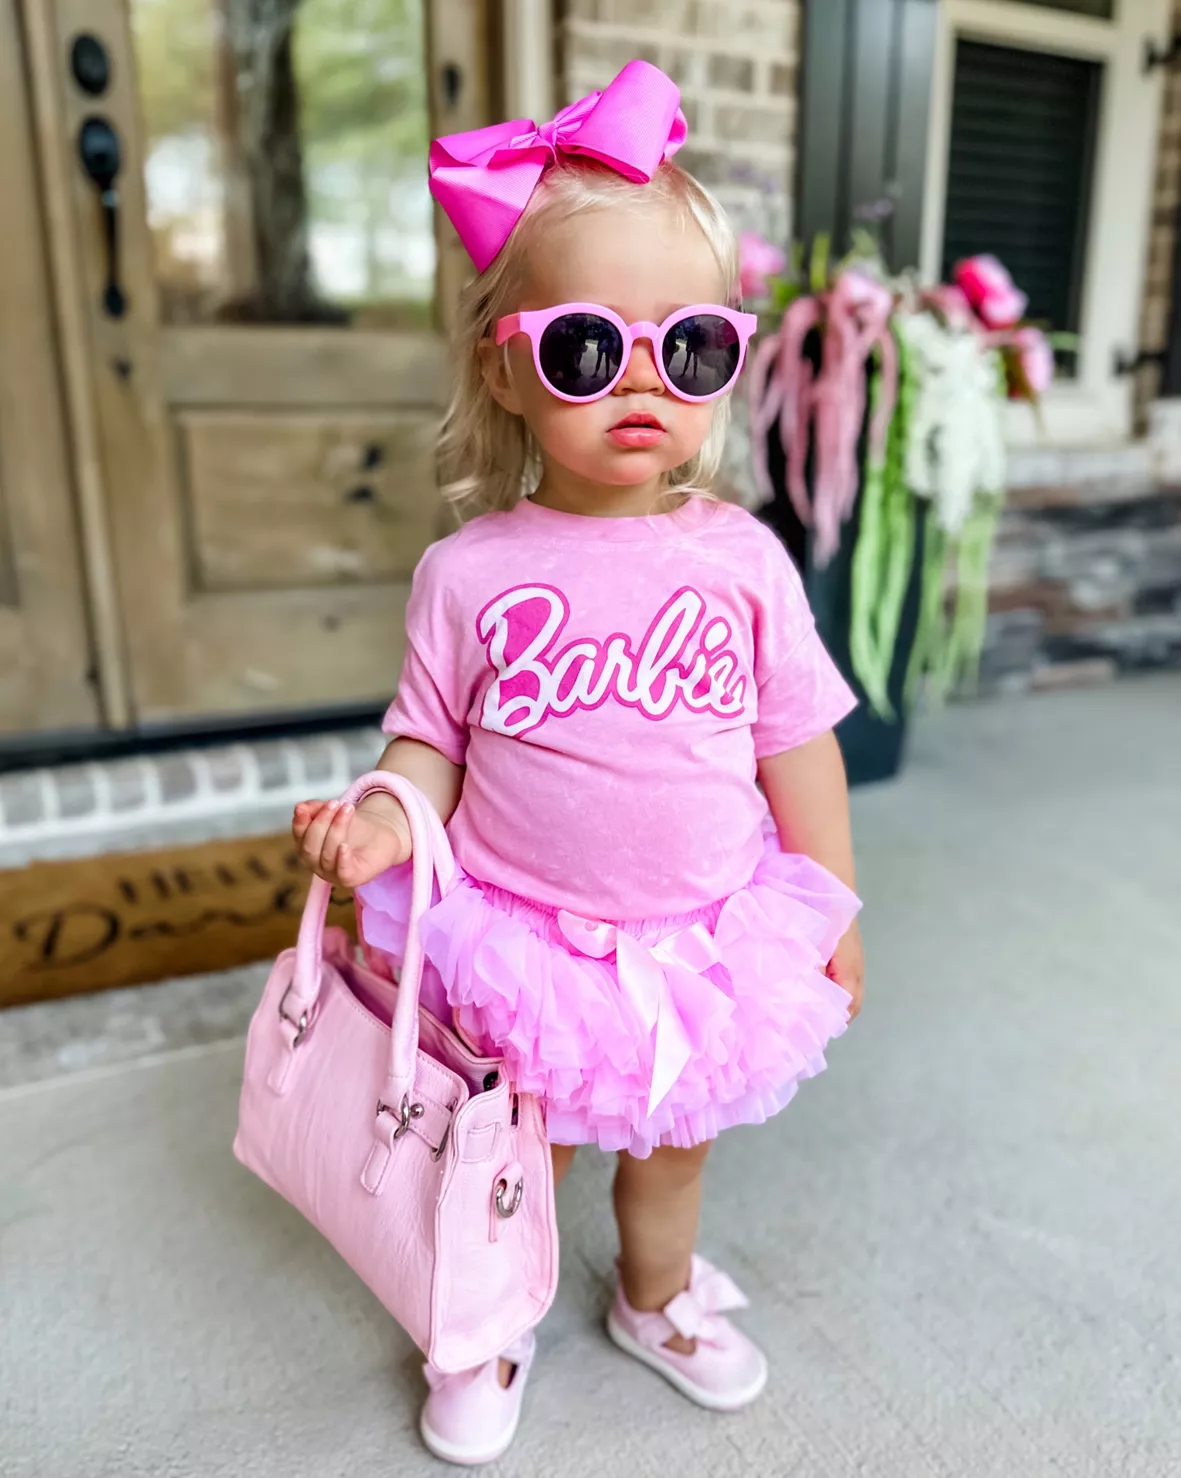 Cute Little Girls Fashionable Handbag Small Preteen Girl's Toy Kid Shoulder Purse  Bag 